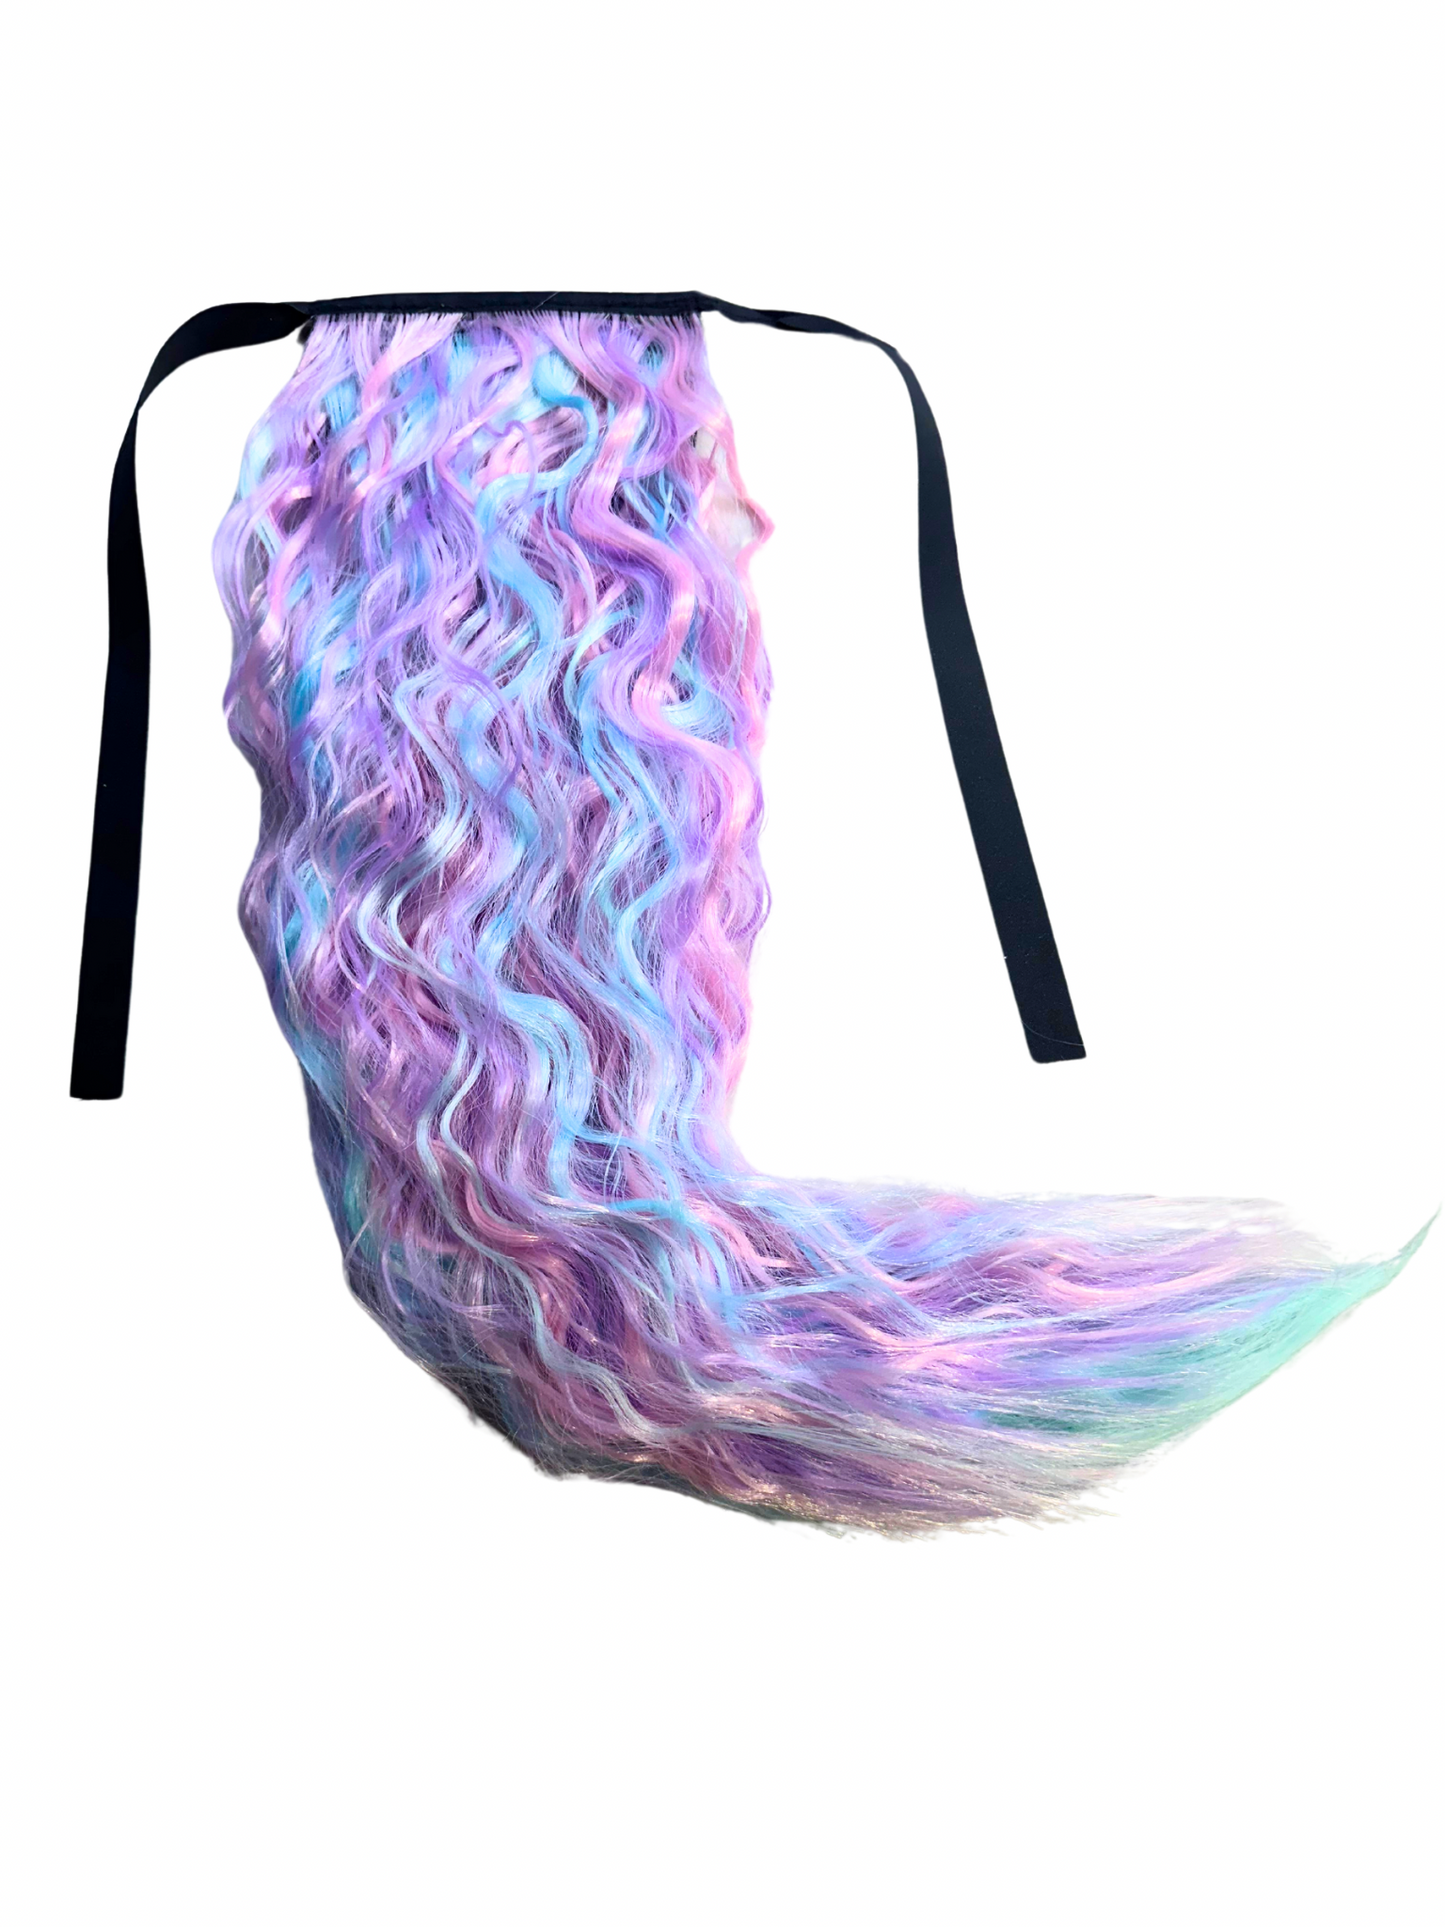 Cotton Candy mermaid hair ponytail